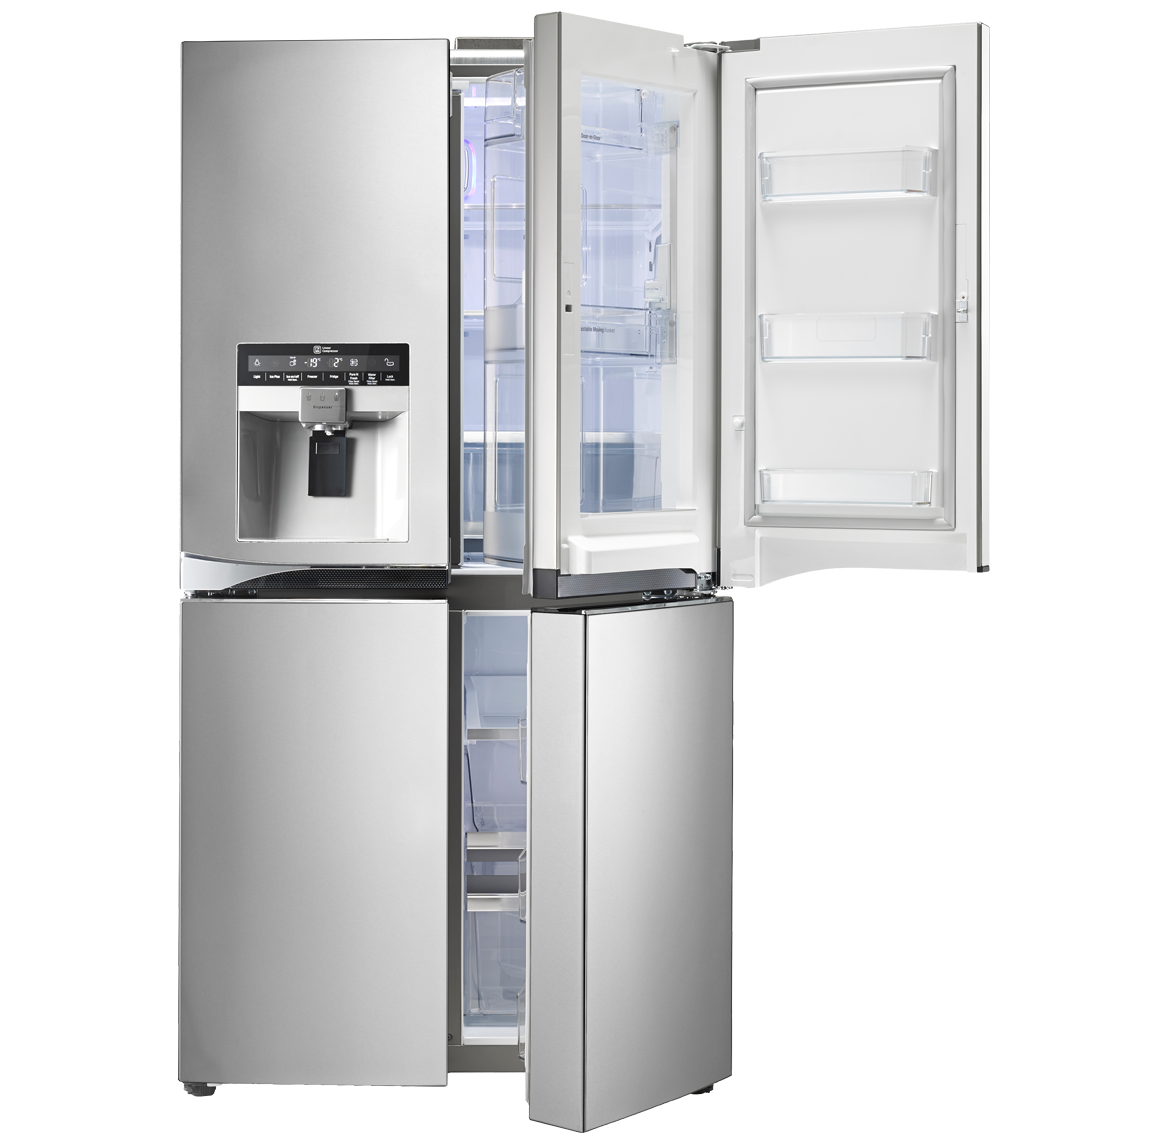 LG Refrigerator PNG Transparent Image